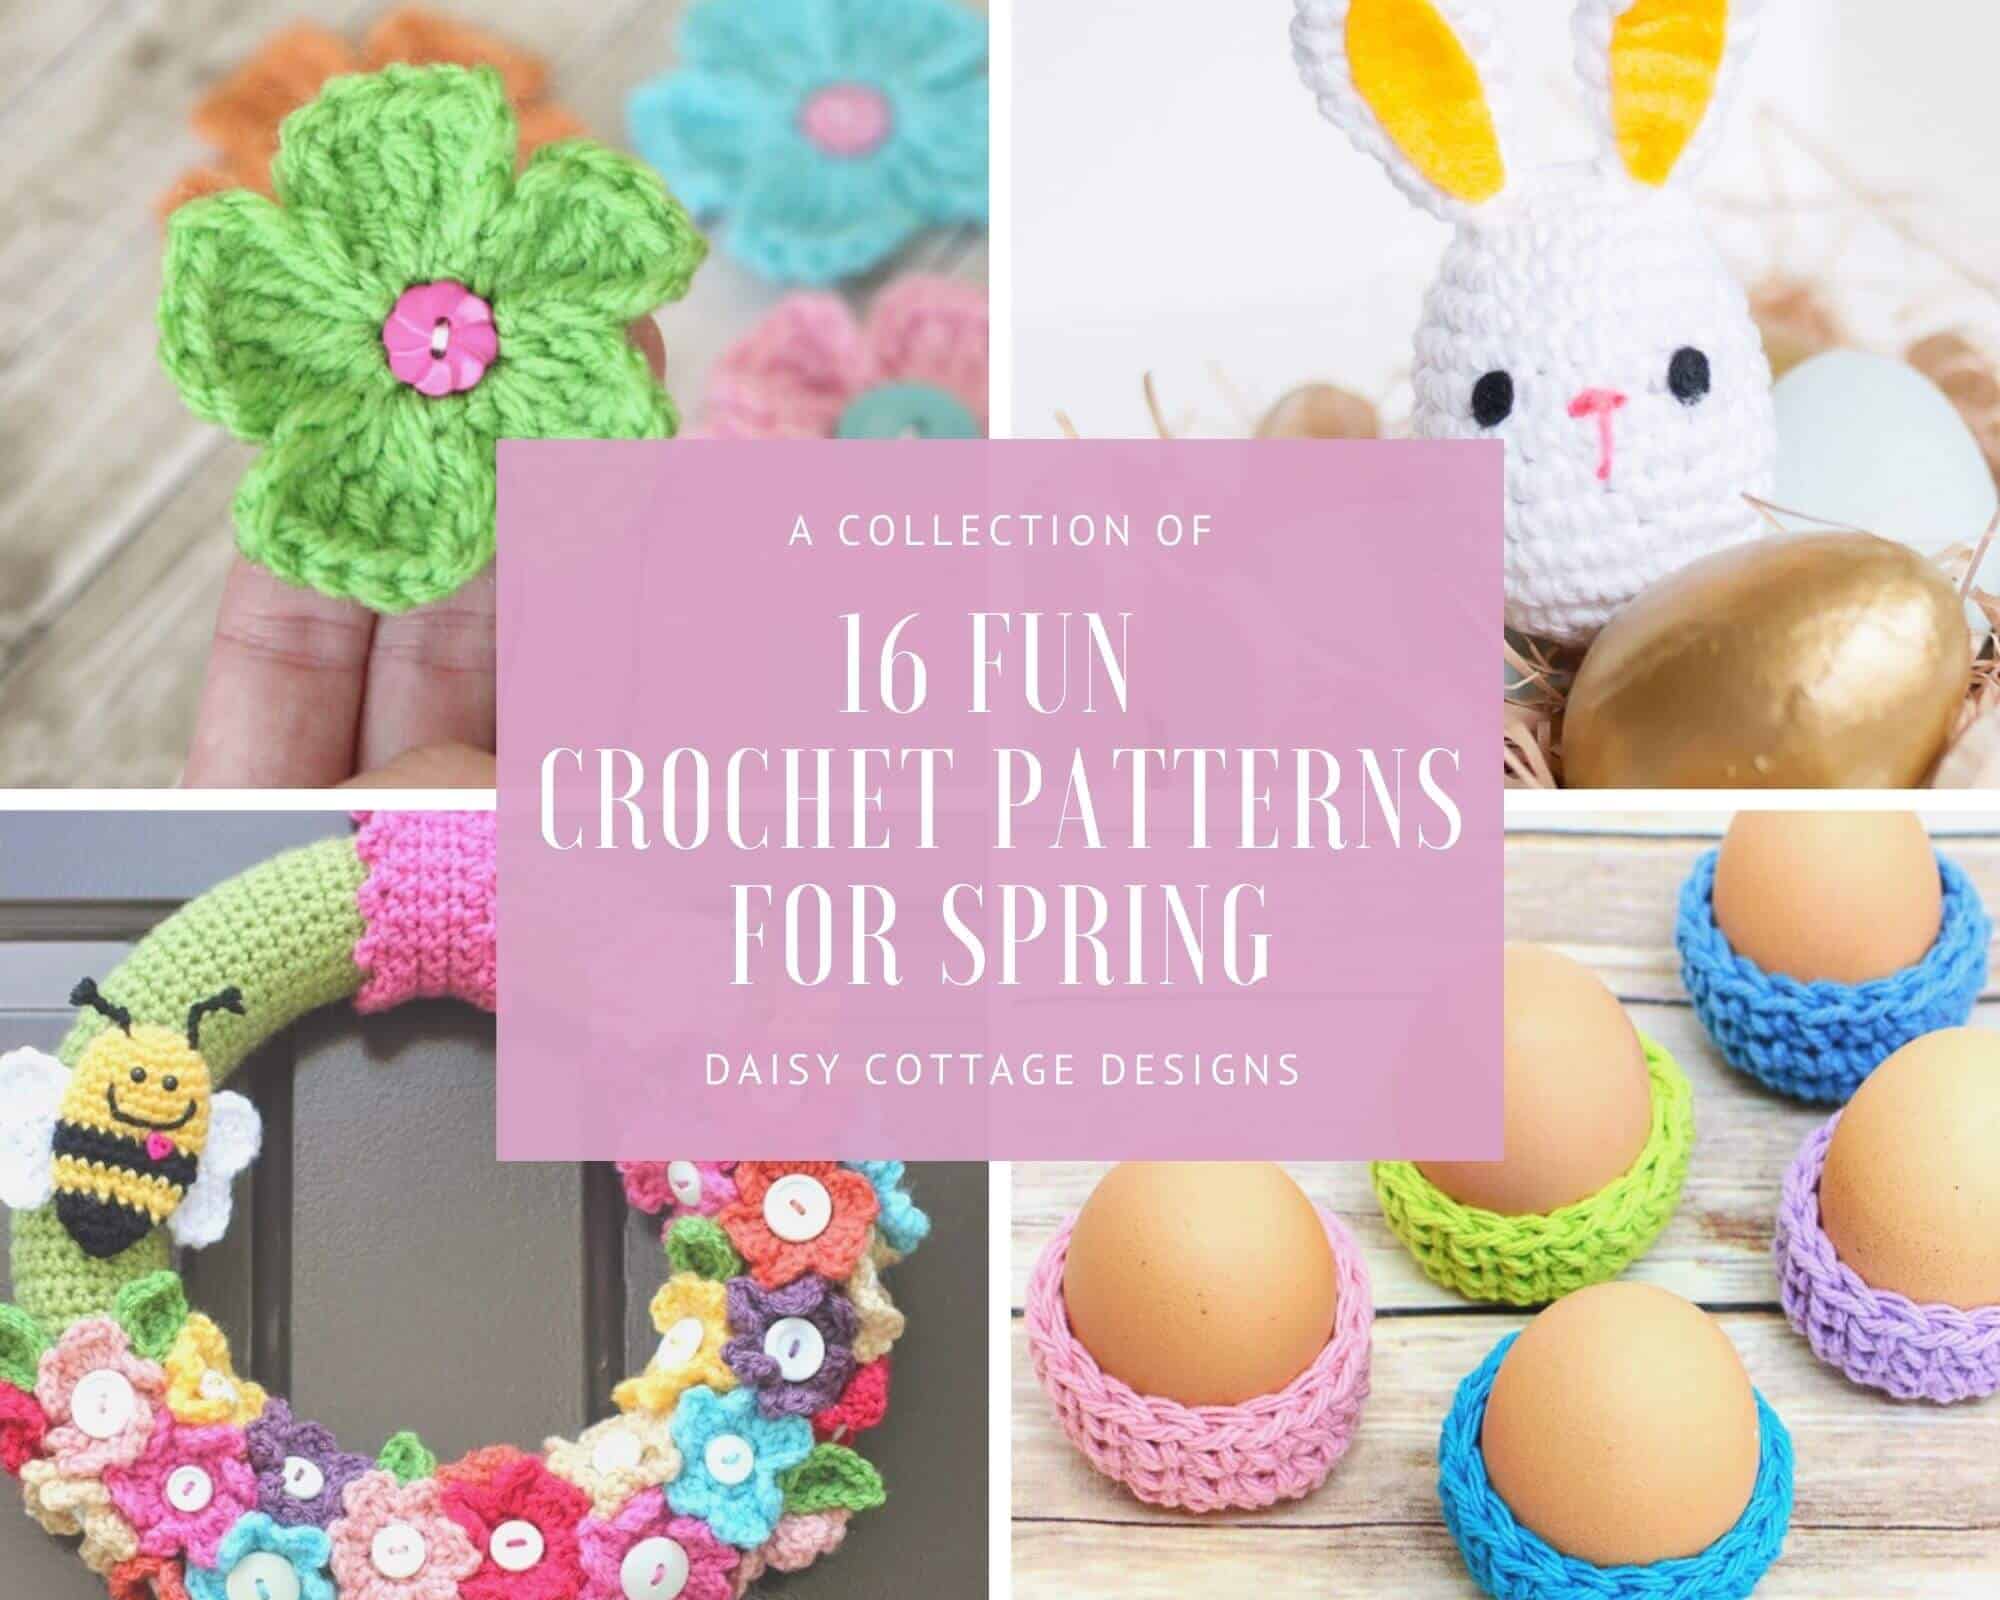 Crochet patterns for spring!